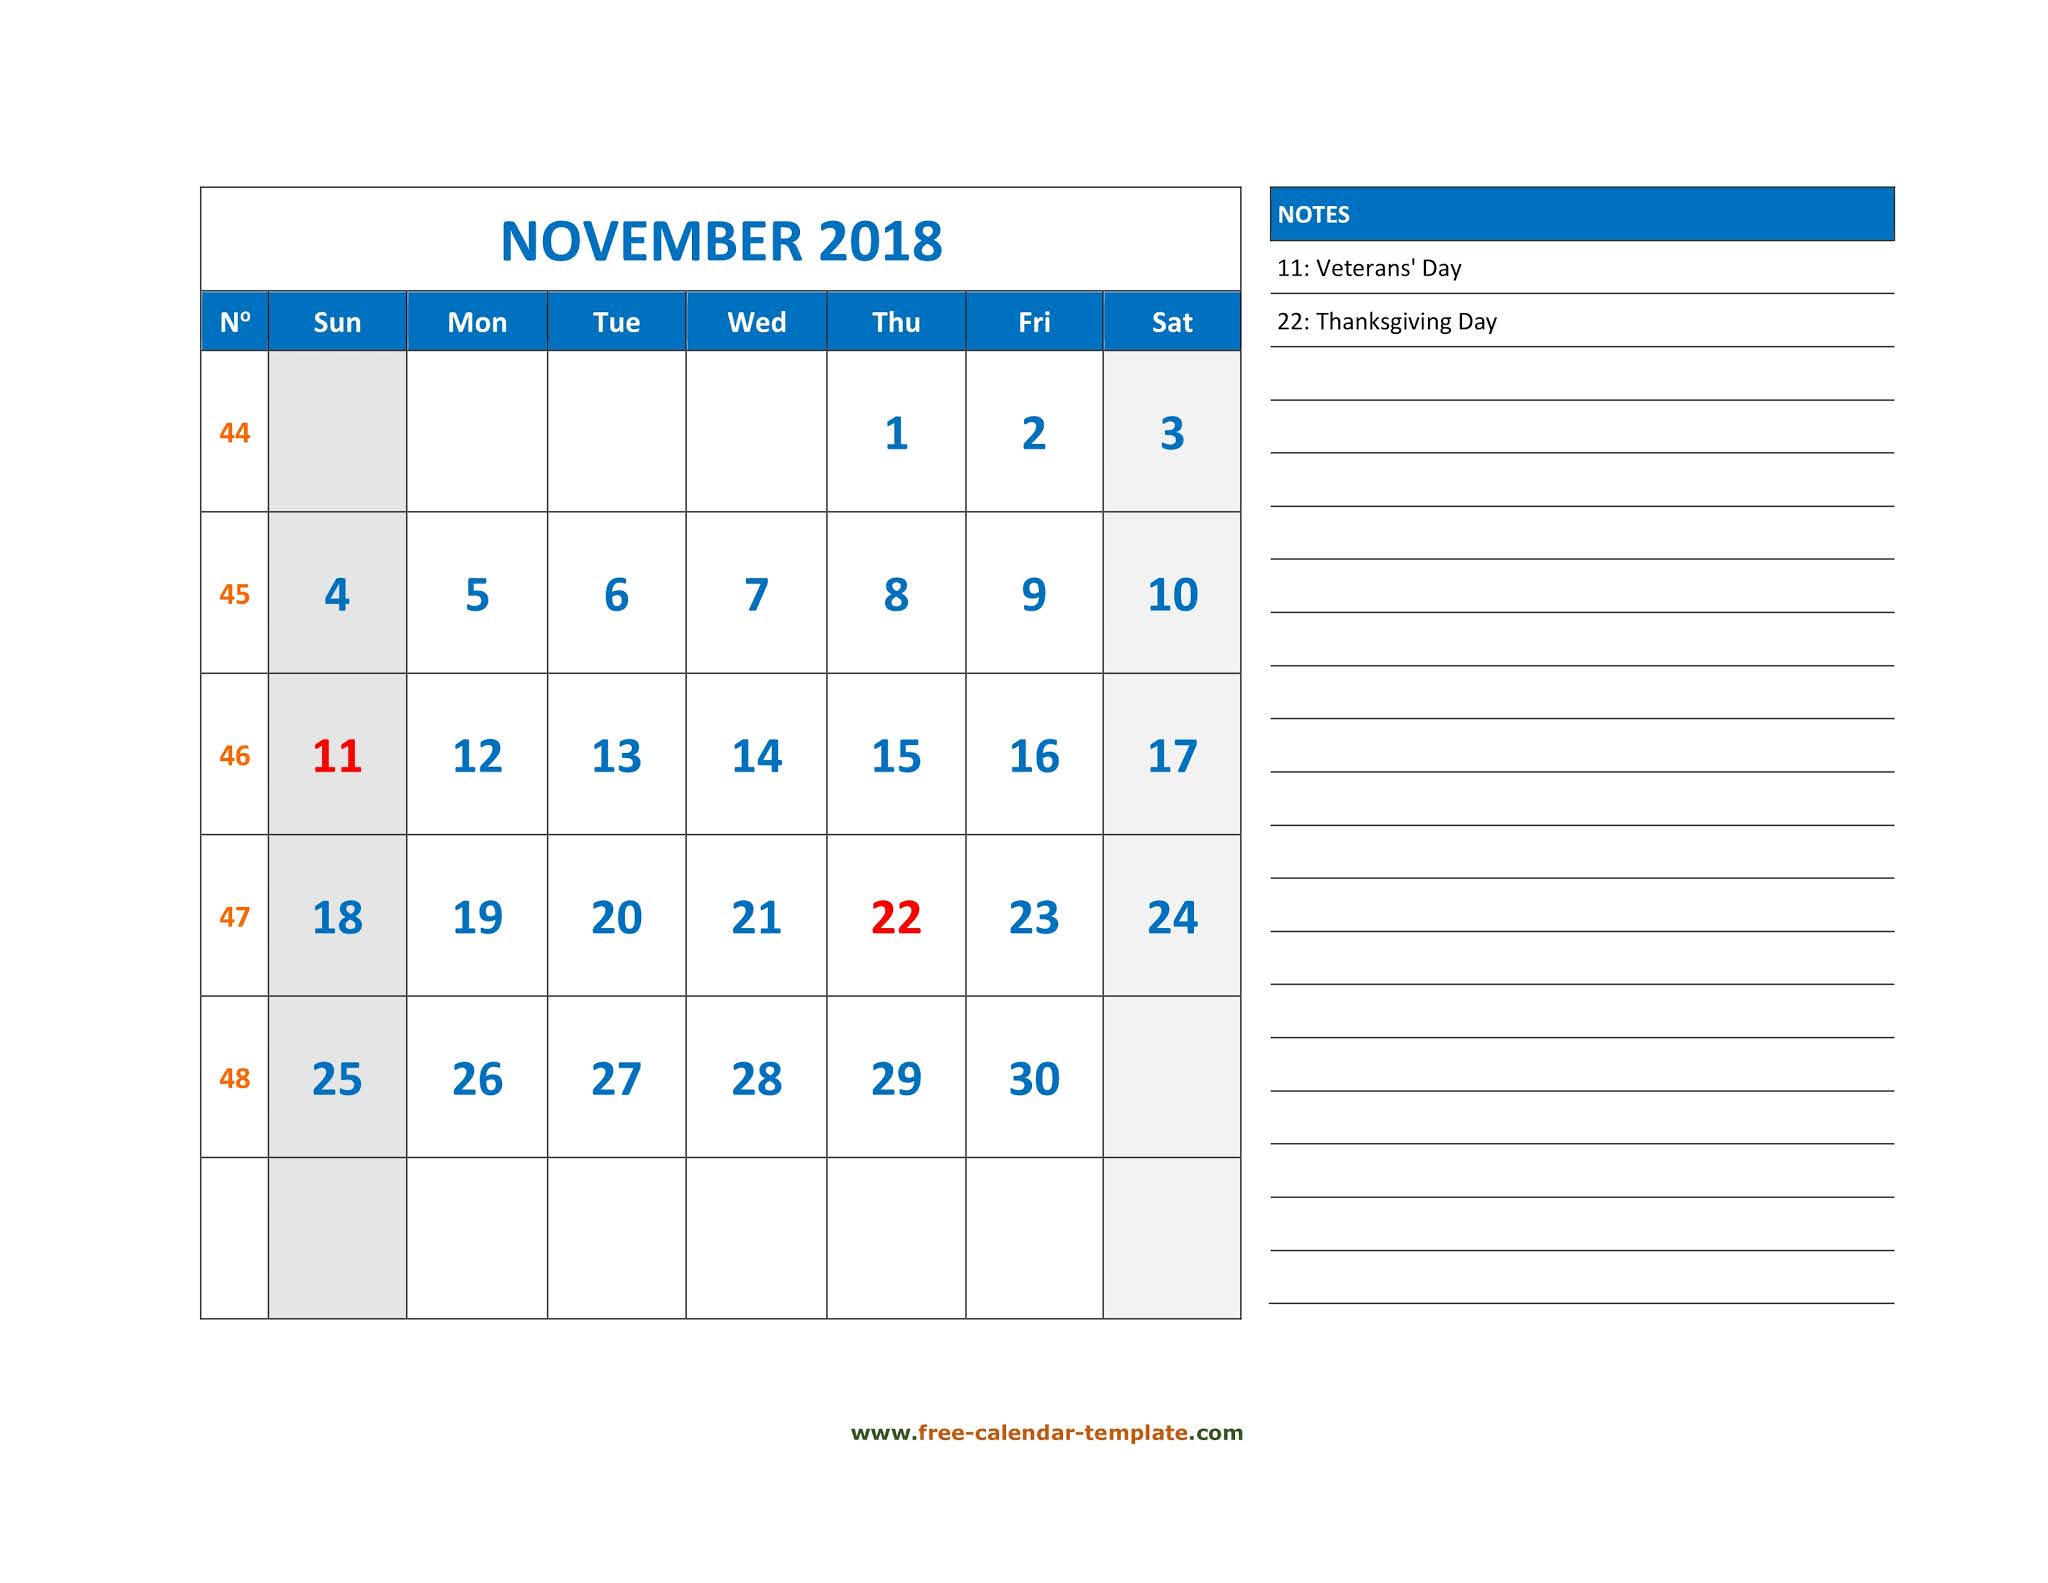 jersey-holiday-calendar-for-november-2018